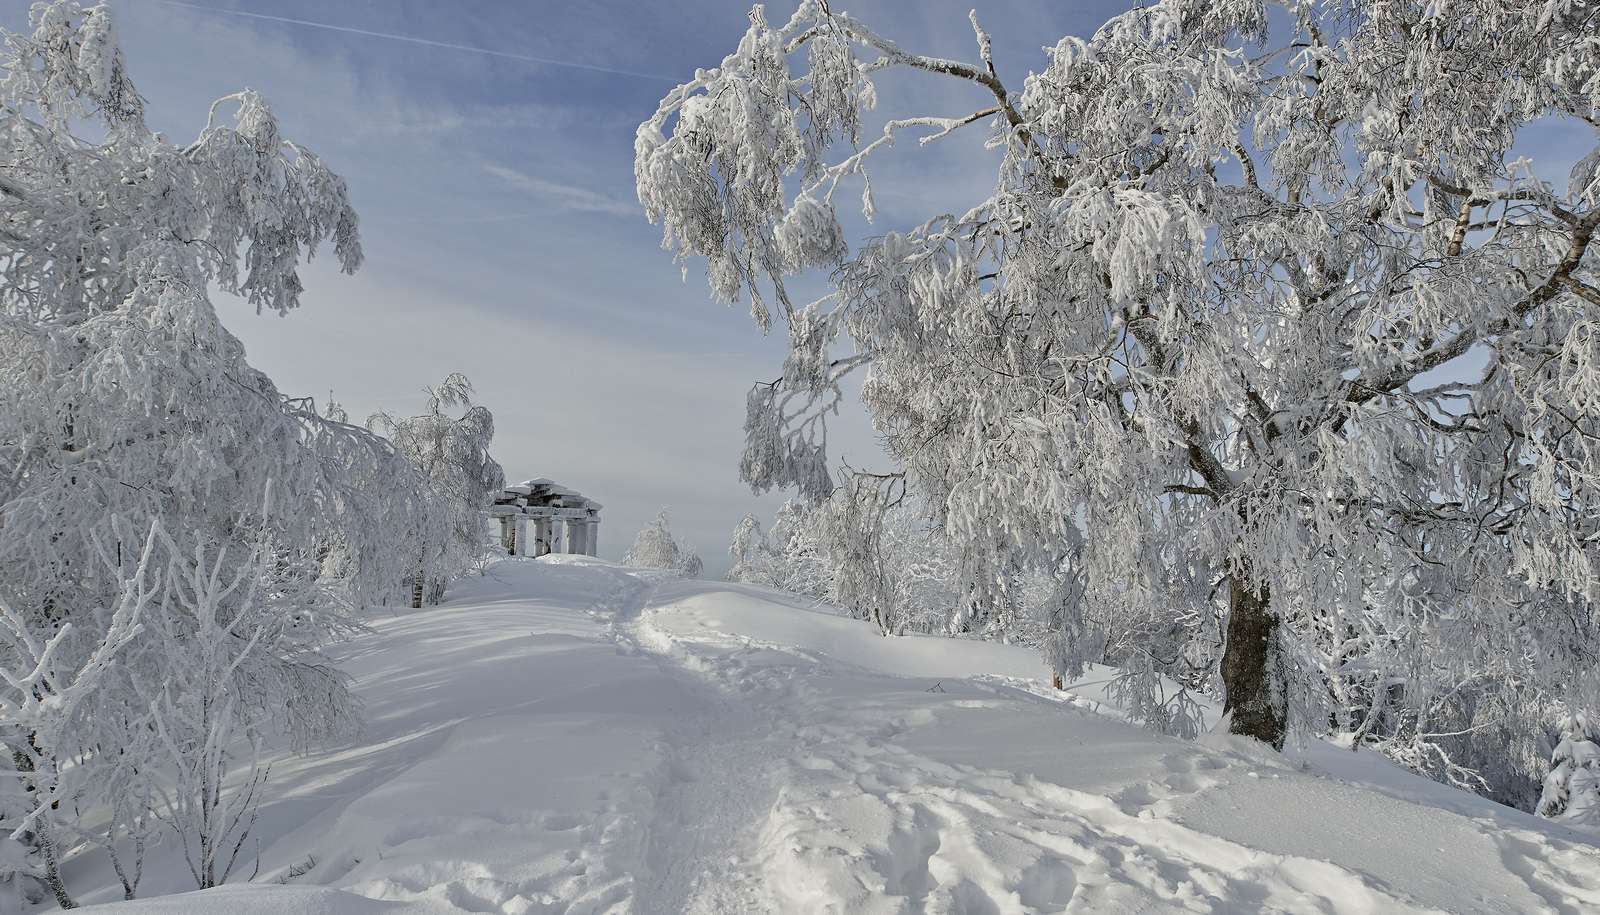 A winter hiking path